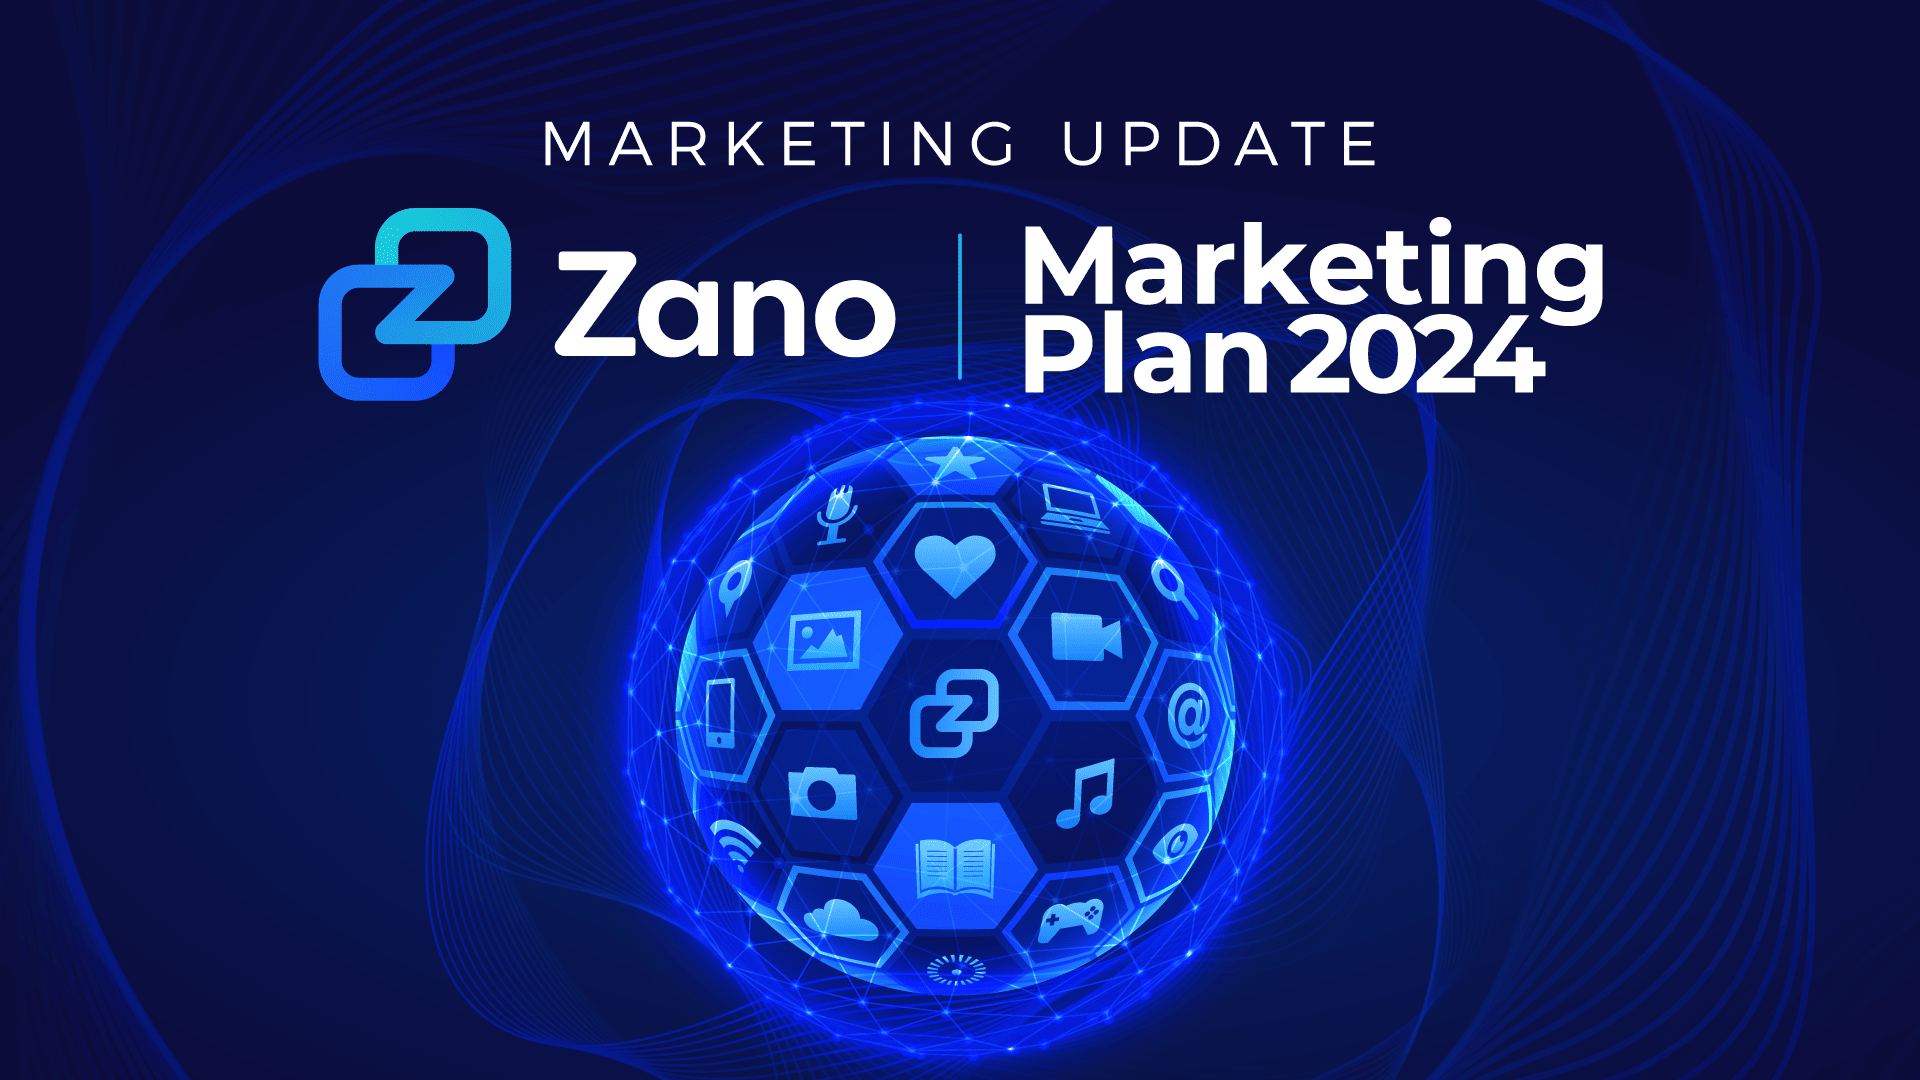 Marketing Update: Zano's marketing plans for 2024